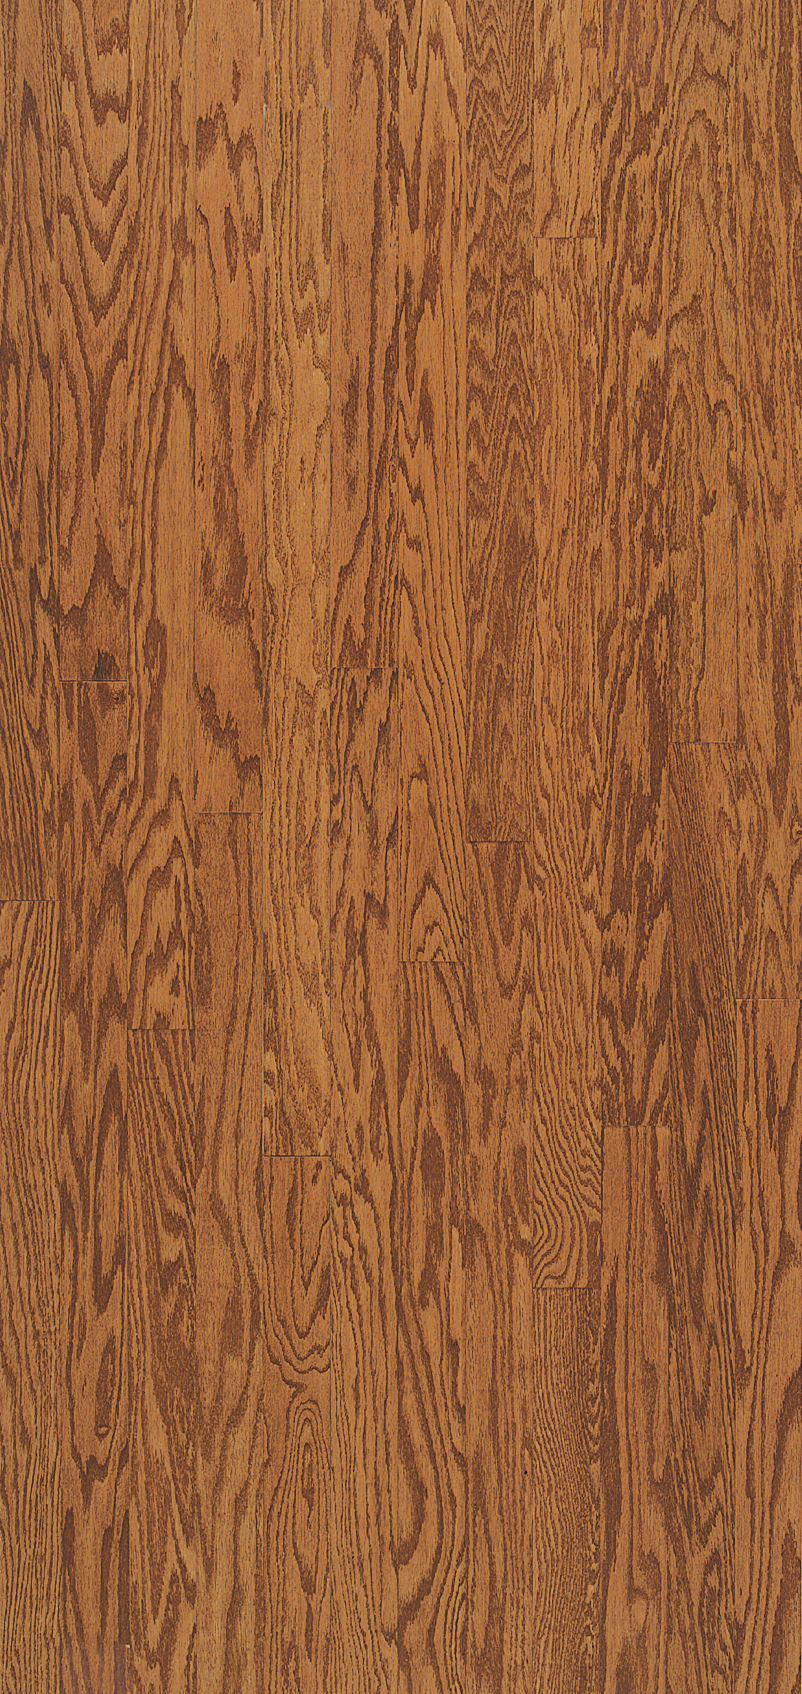 Gunstock Oak 5" - Turlington Lock&Fold Collection - Engineered Hardwood Flooring by Bruce